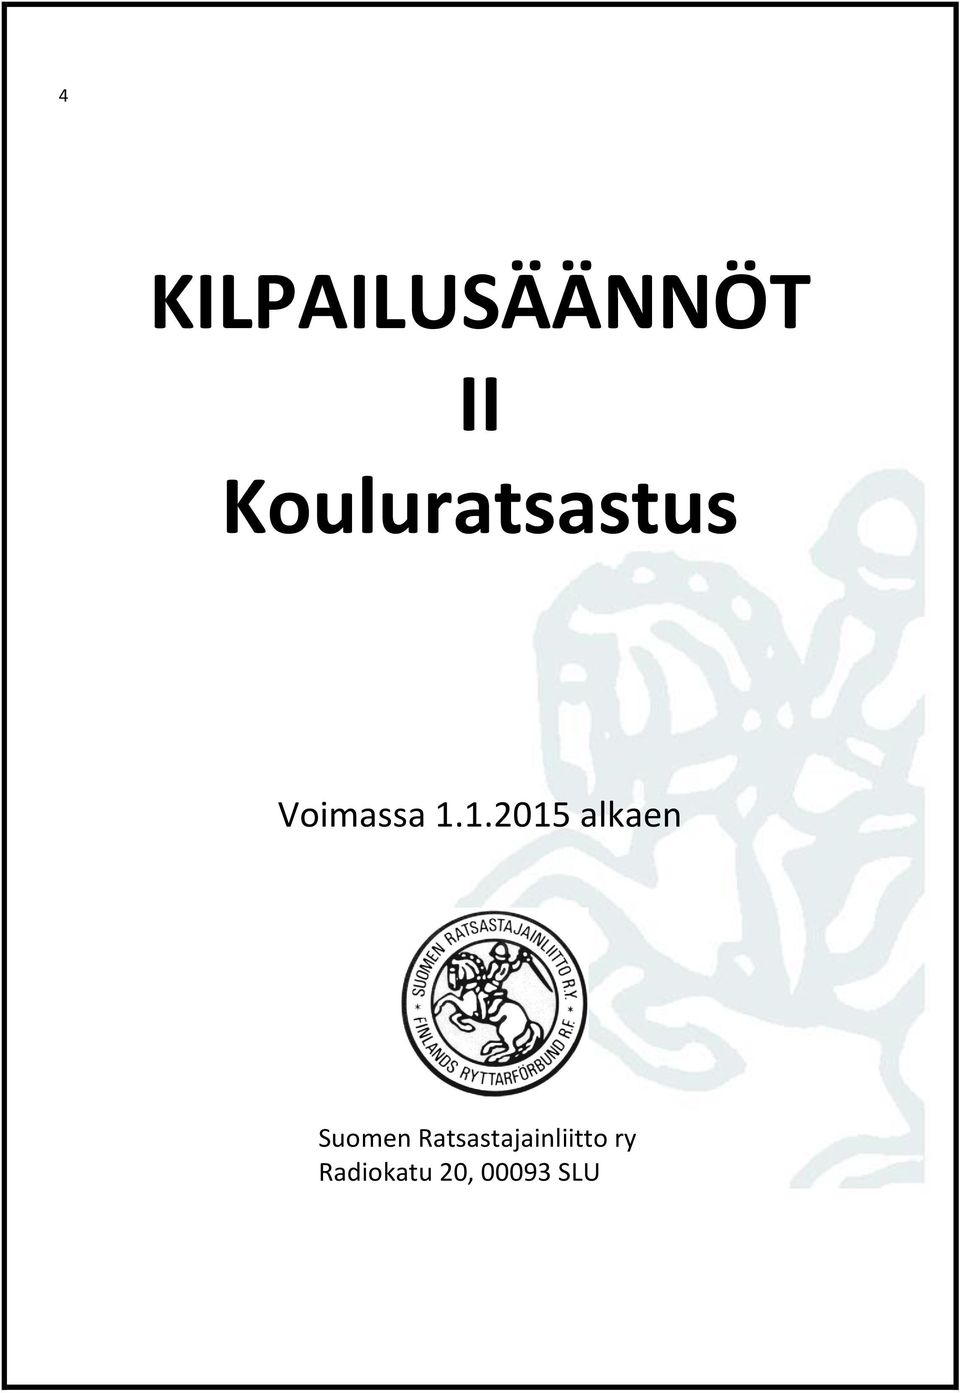 1.2015 alkaen Suomen